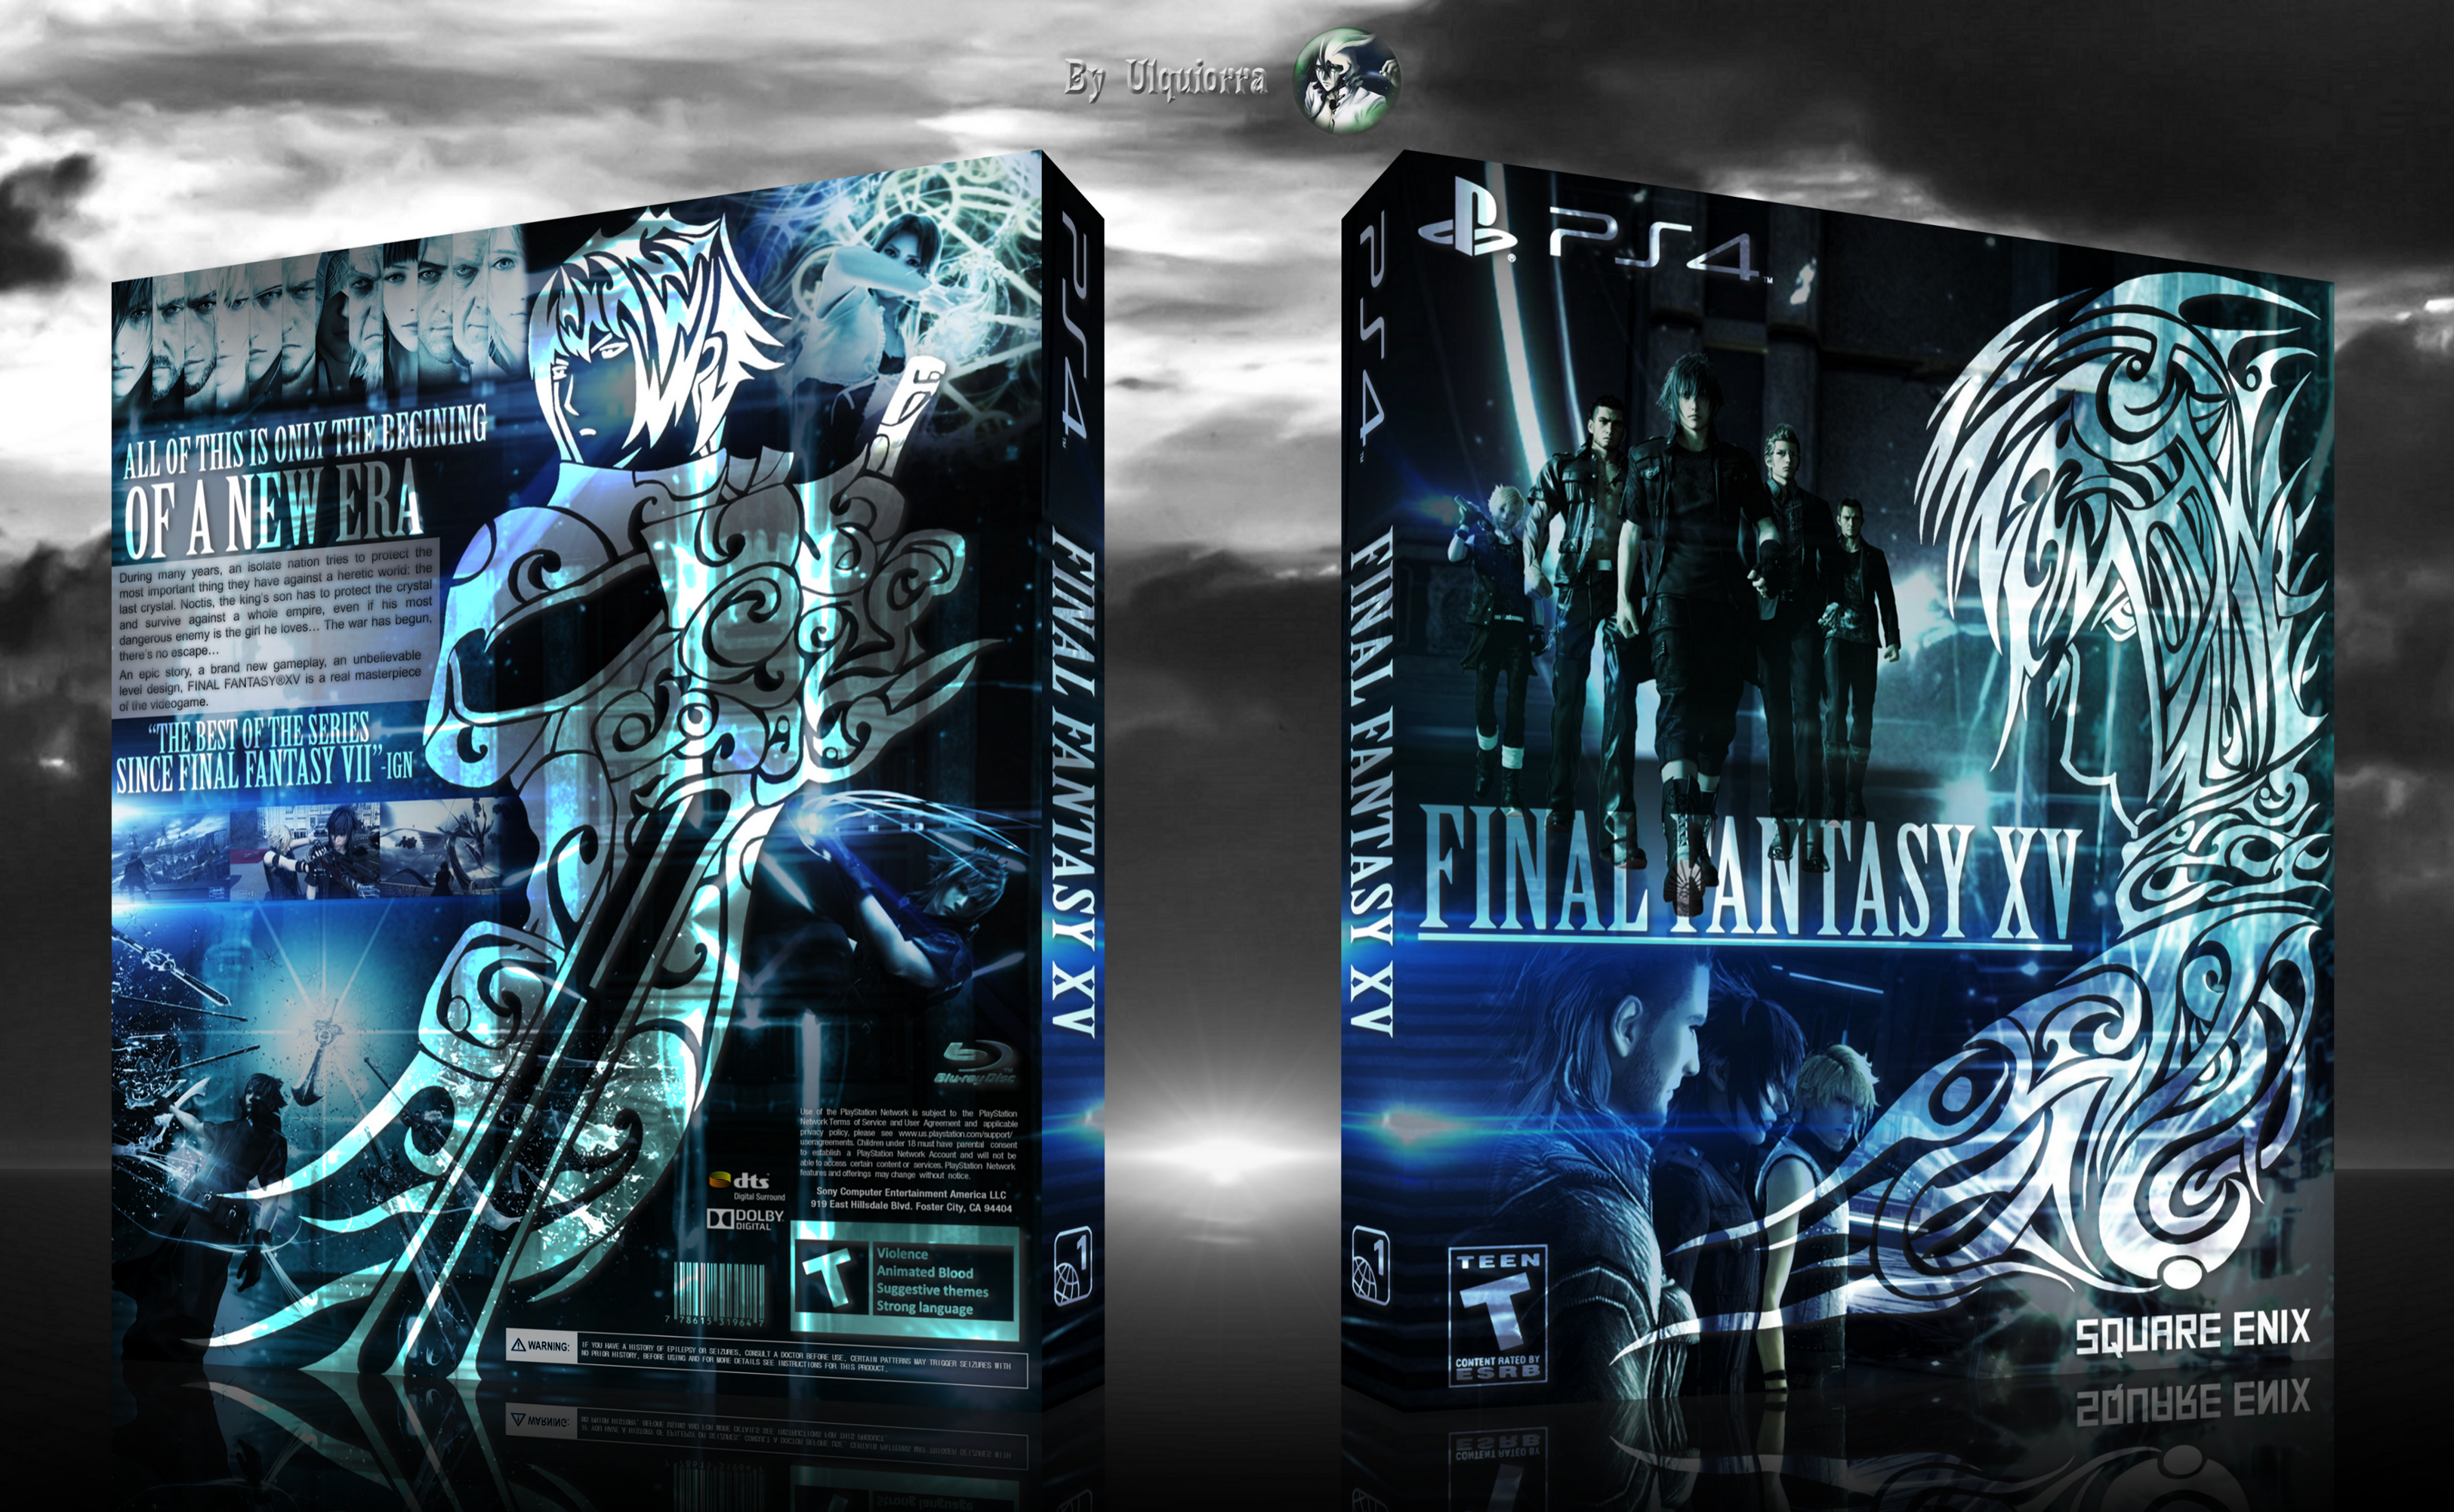 Final Fantasy XV box cover